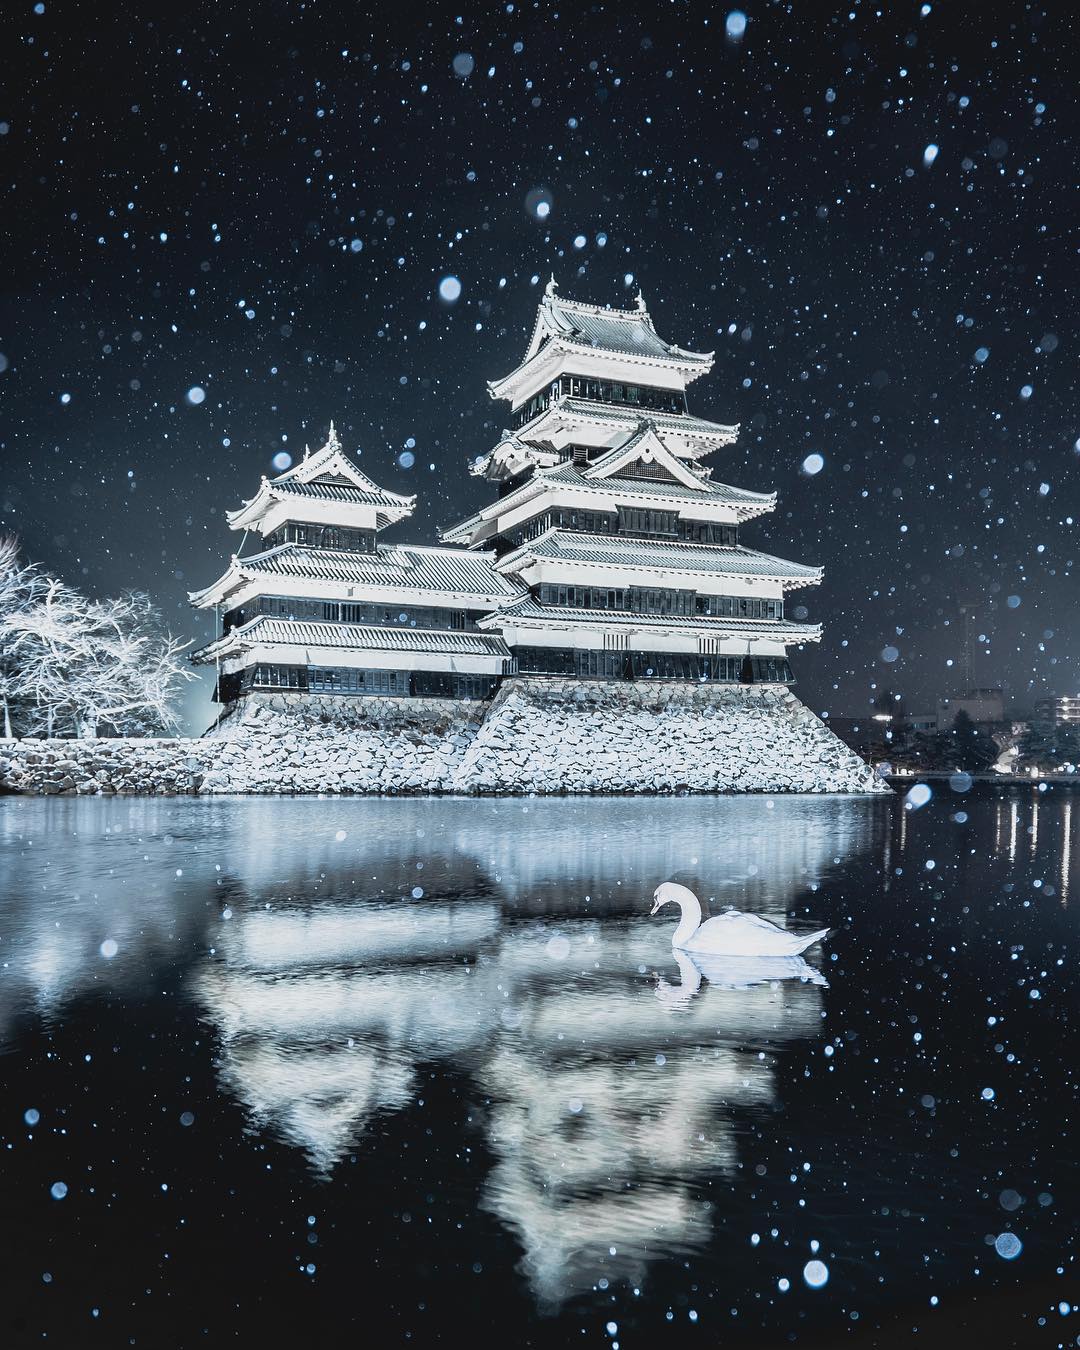 Matsumoto Castle during a snowfall, Nagano prefecture, Japan